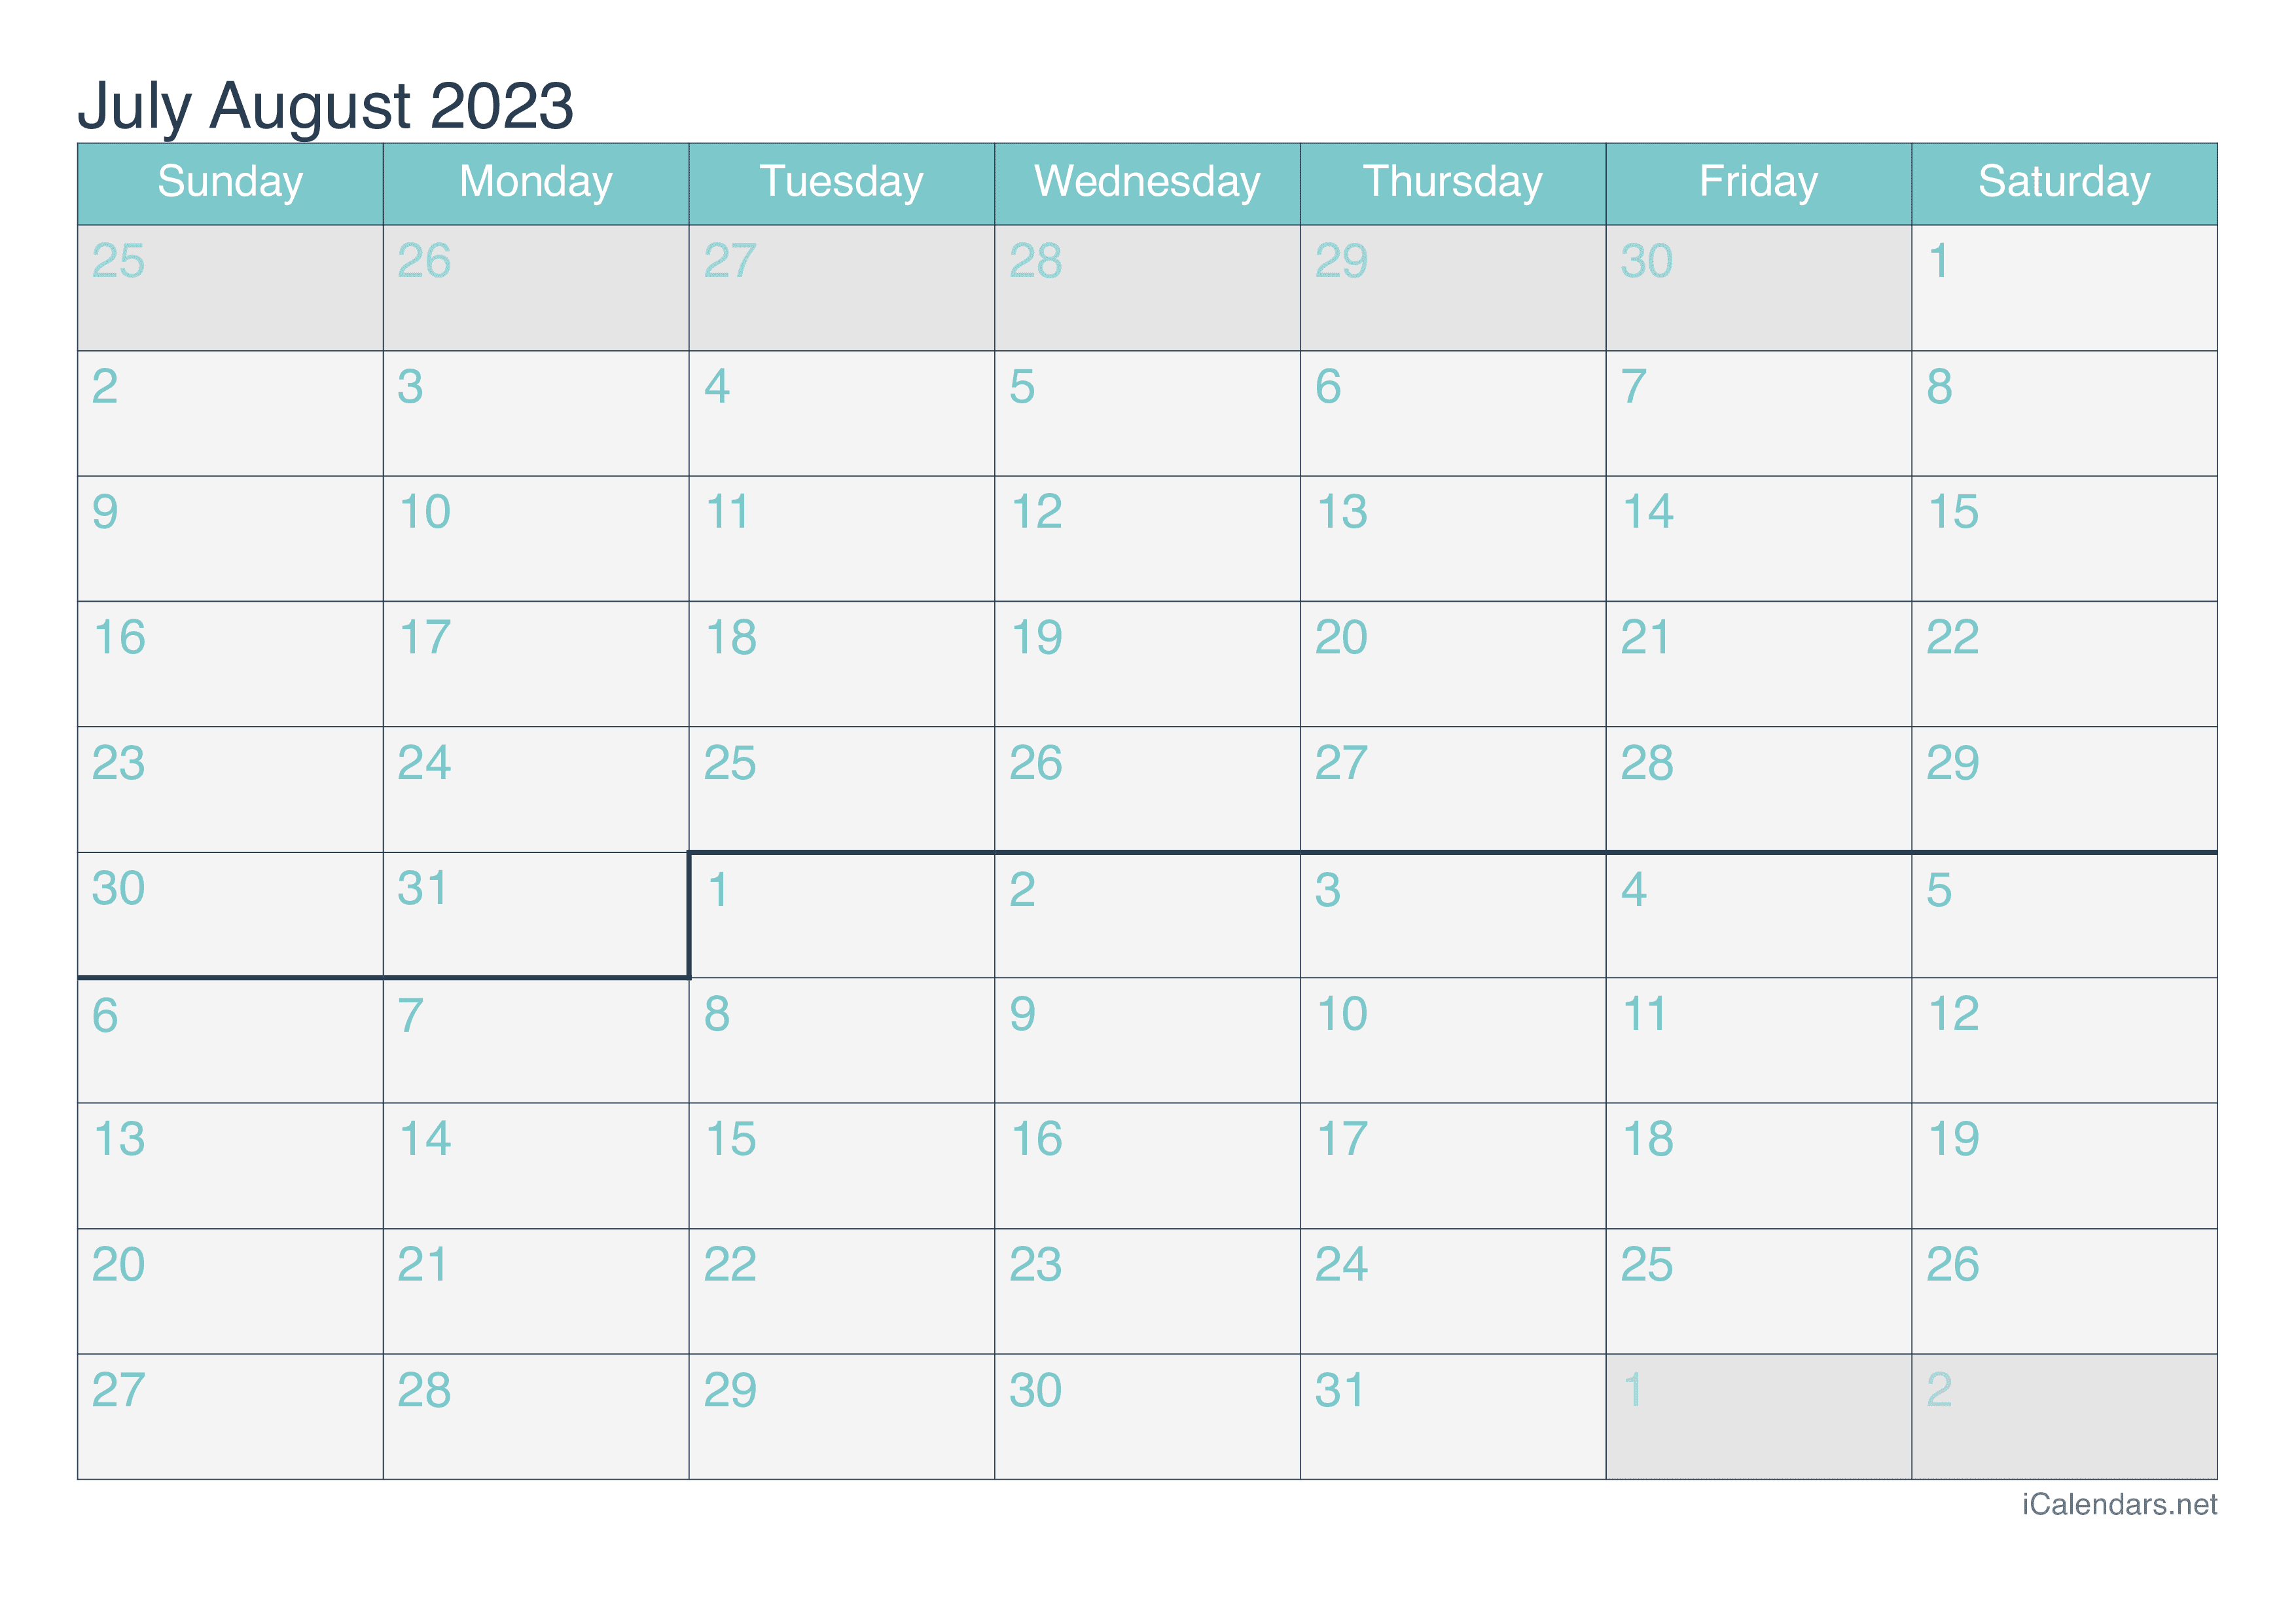 July and August 2023 Printable Calendar icalendars net